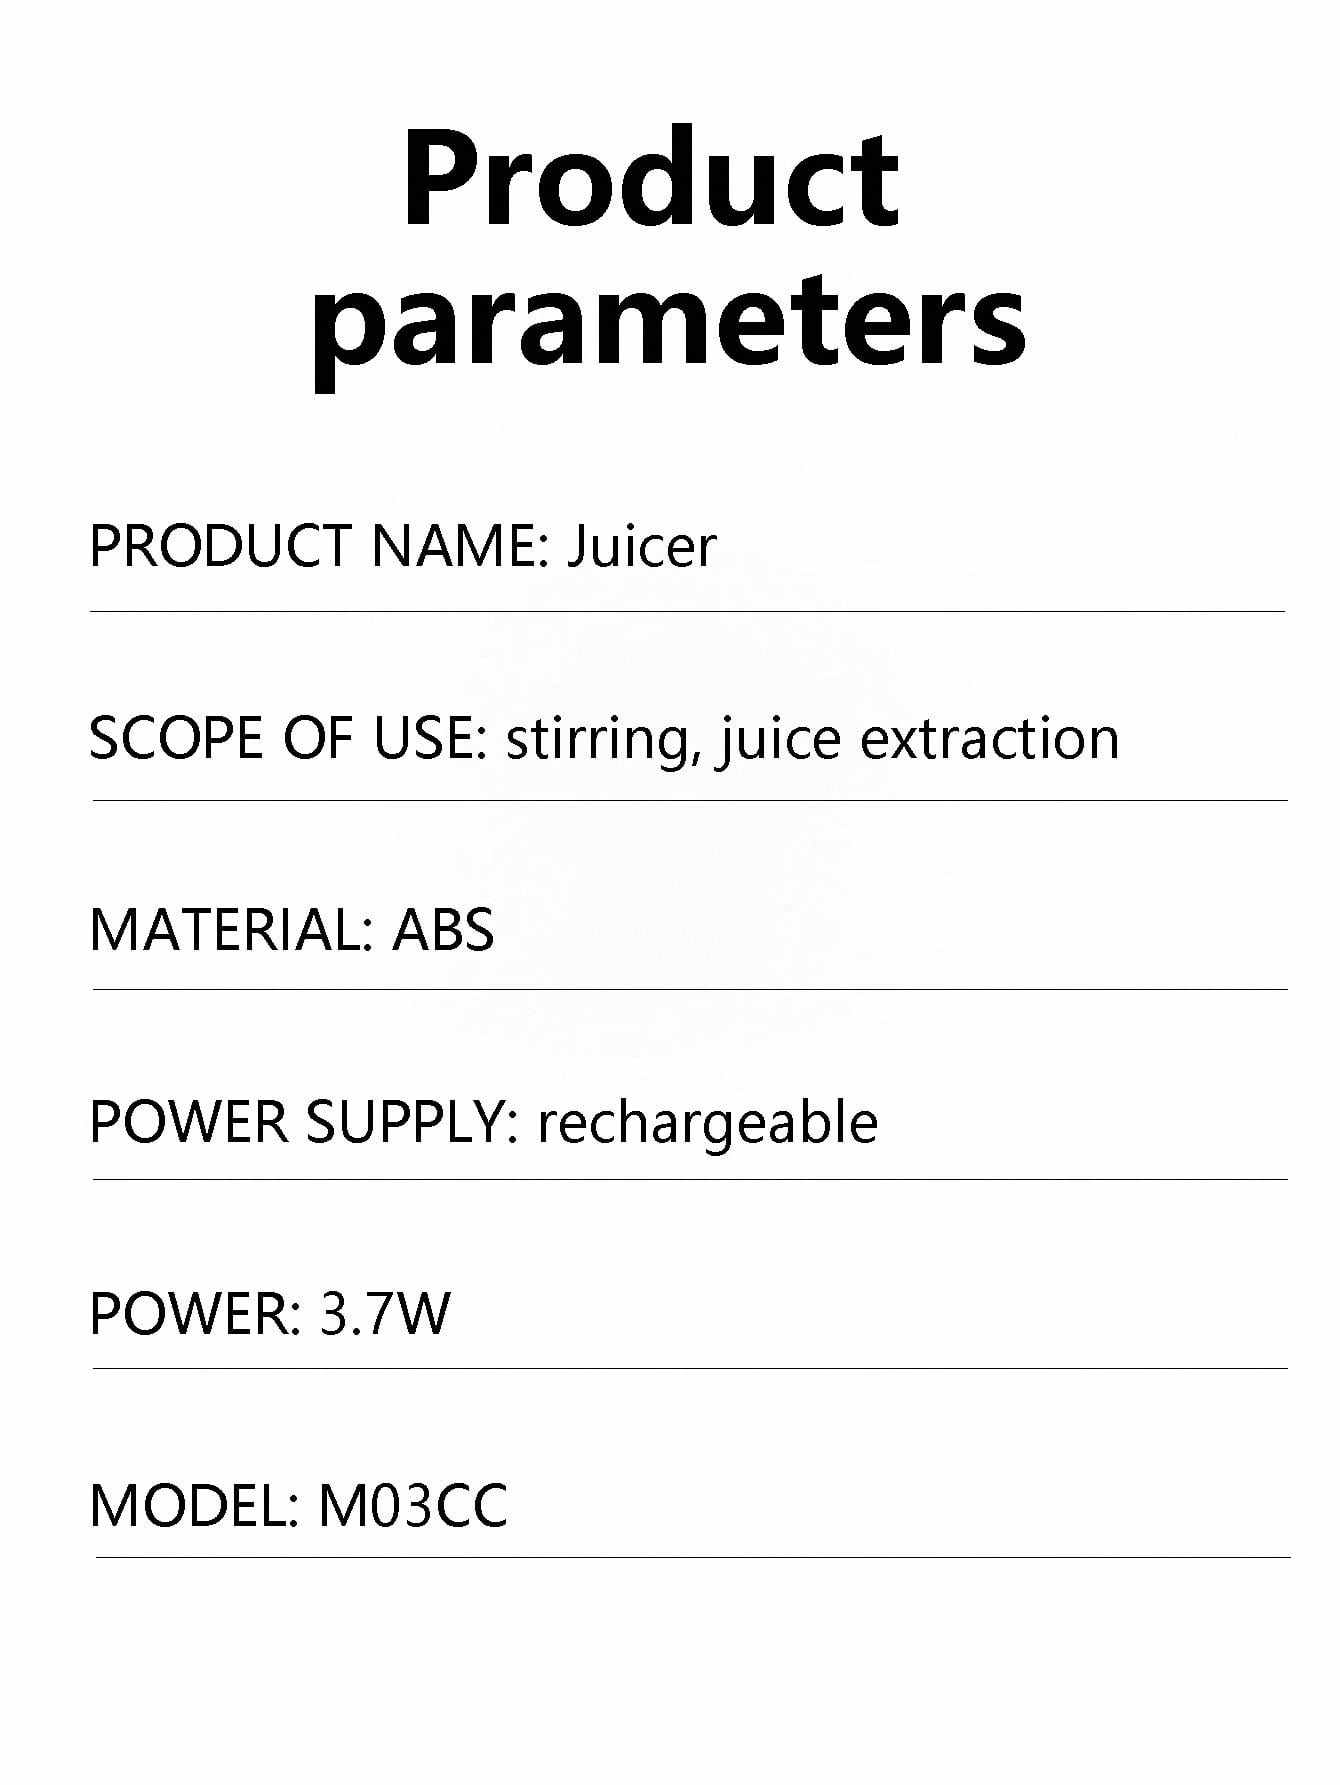 Portable Electric Juicer - 1pc ABS Juice Blender | Buy Online